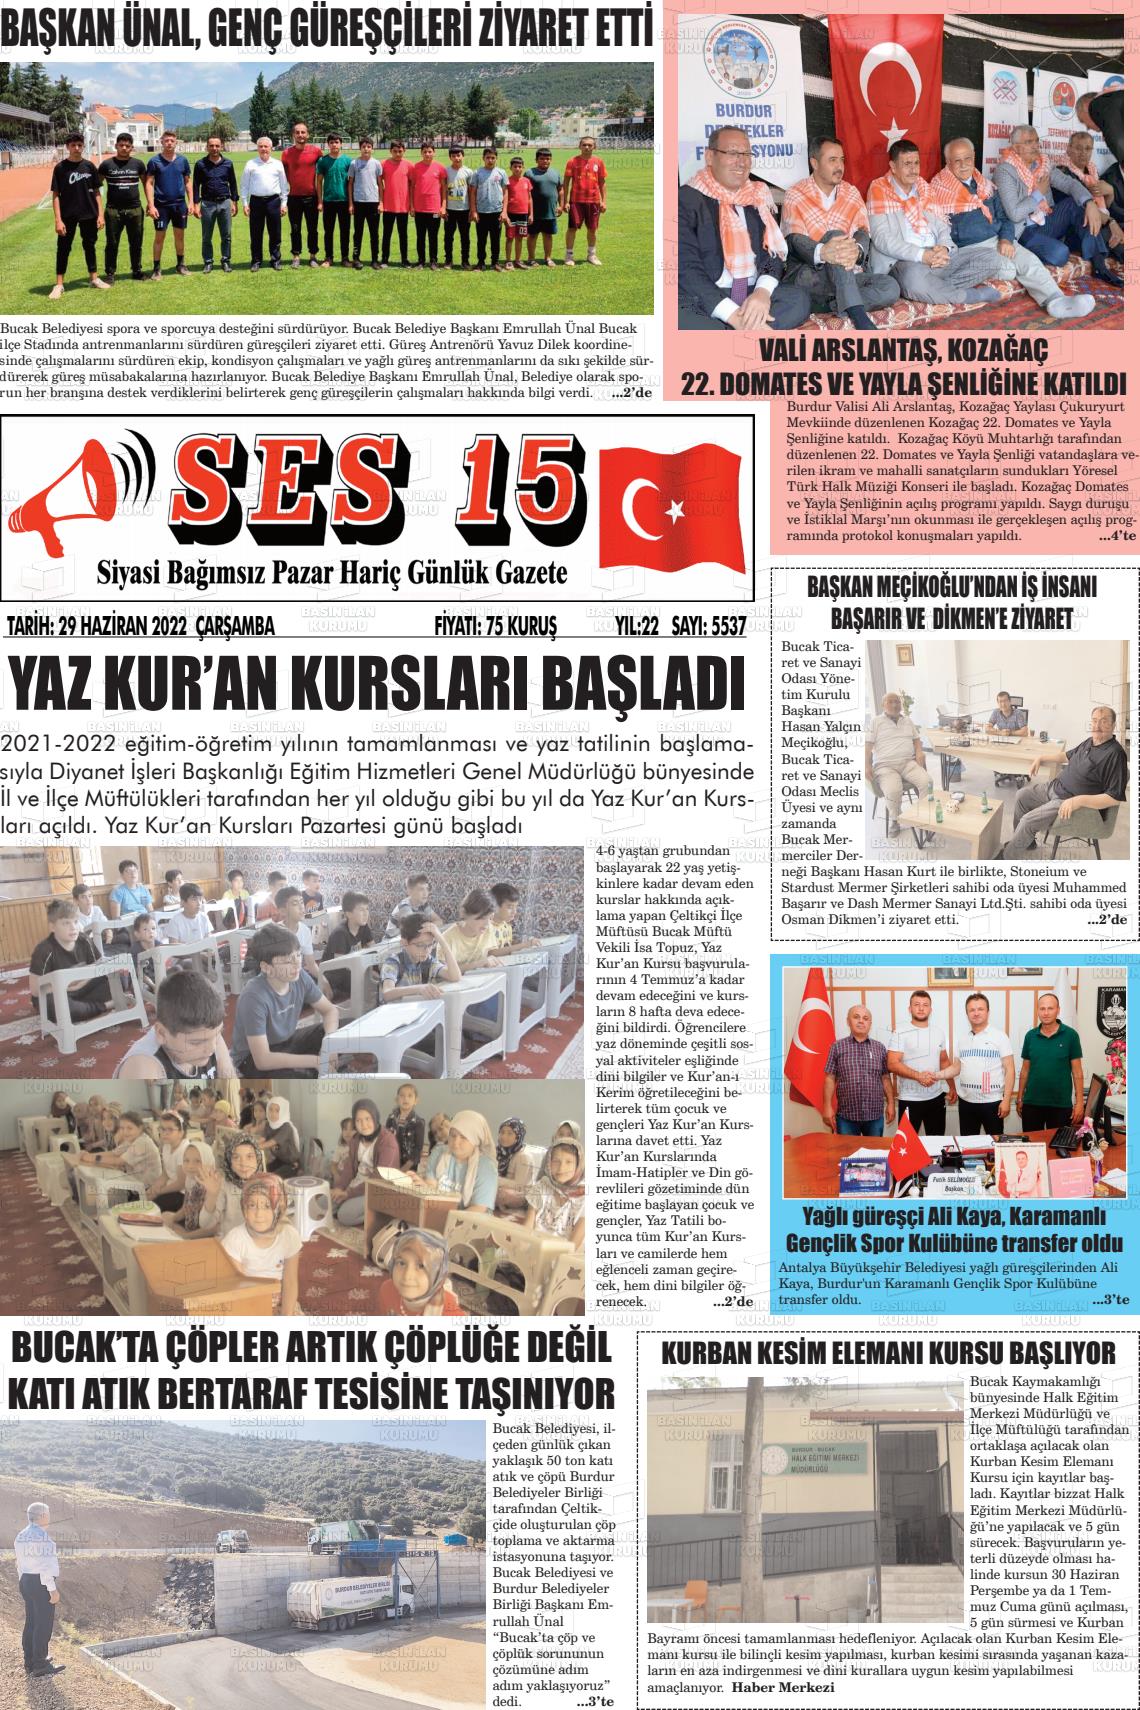 29 Haziran 2022 Ses 15 Gazete Manşeti